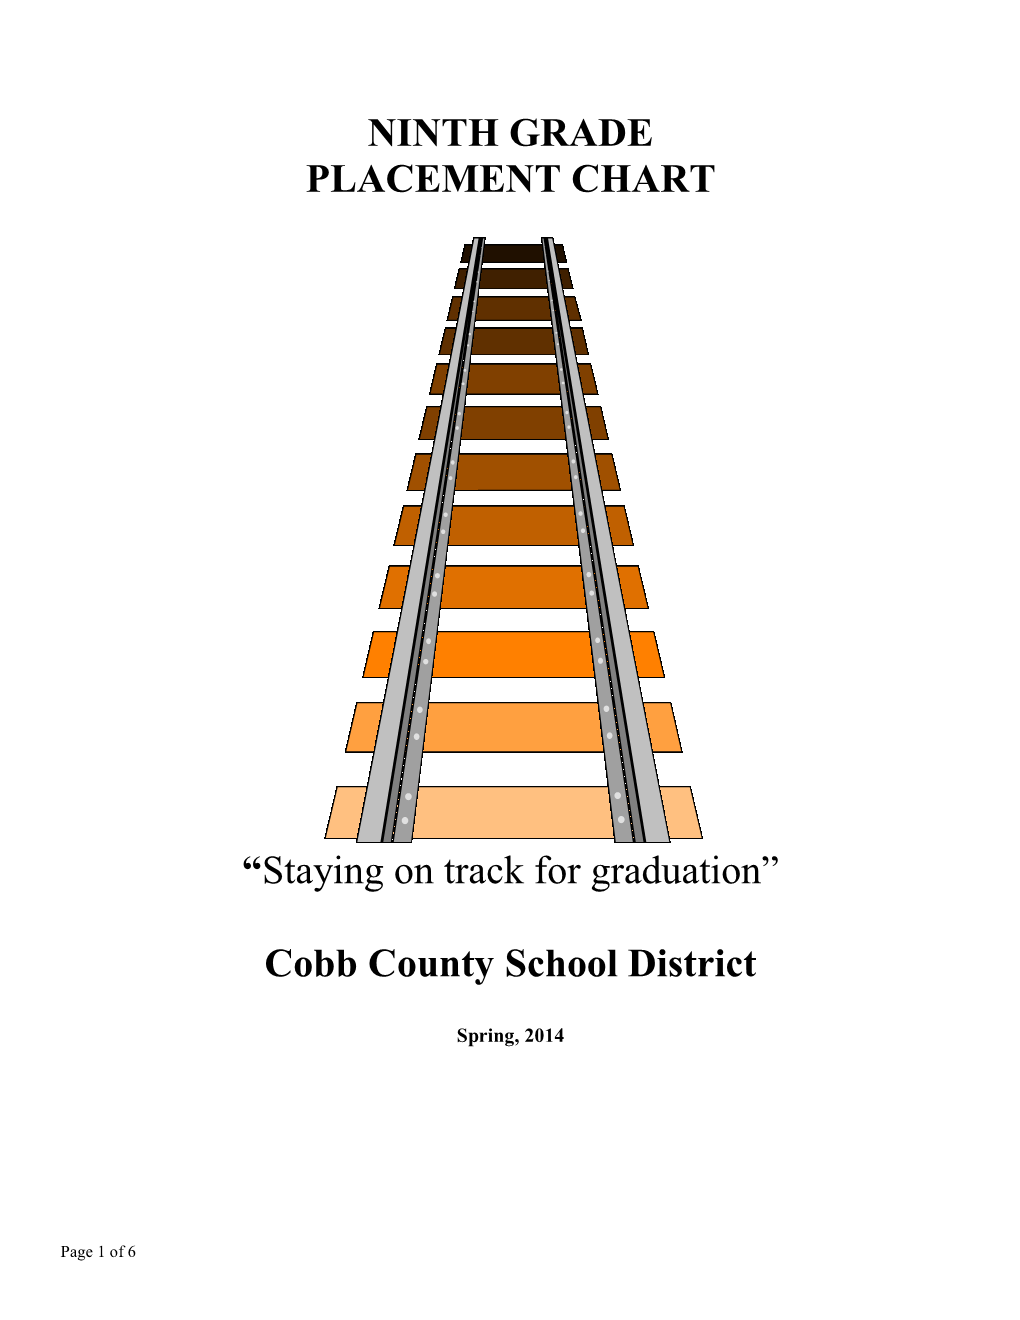 Ninth Grade Placement Chart